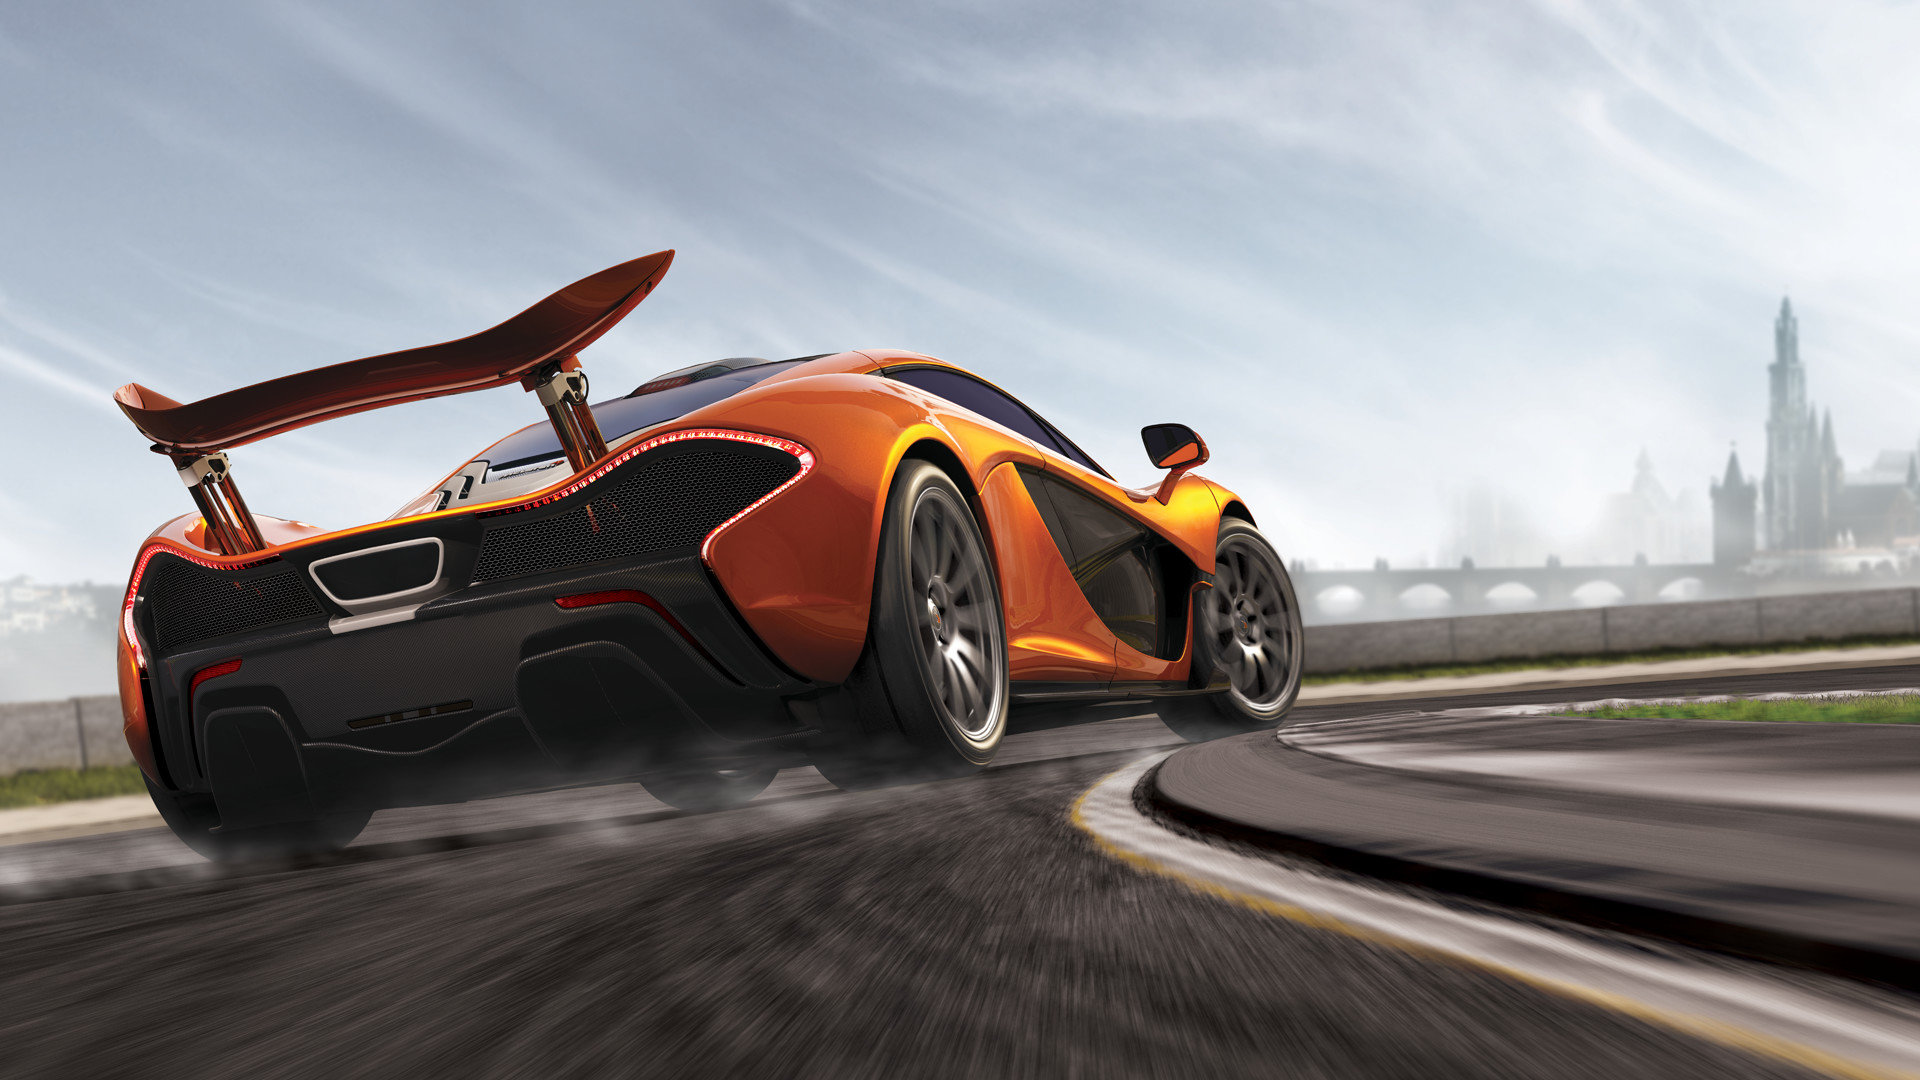 Download full hd 1920x1080 Forza Motorsport 5 desktop background ID:210200 for free